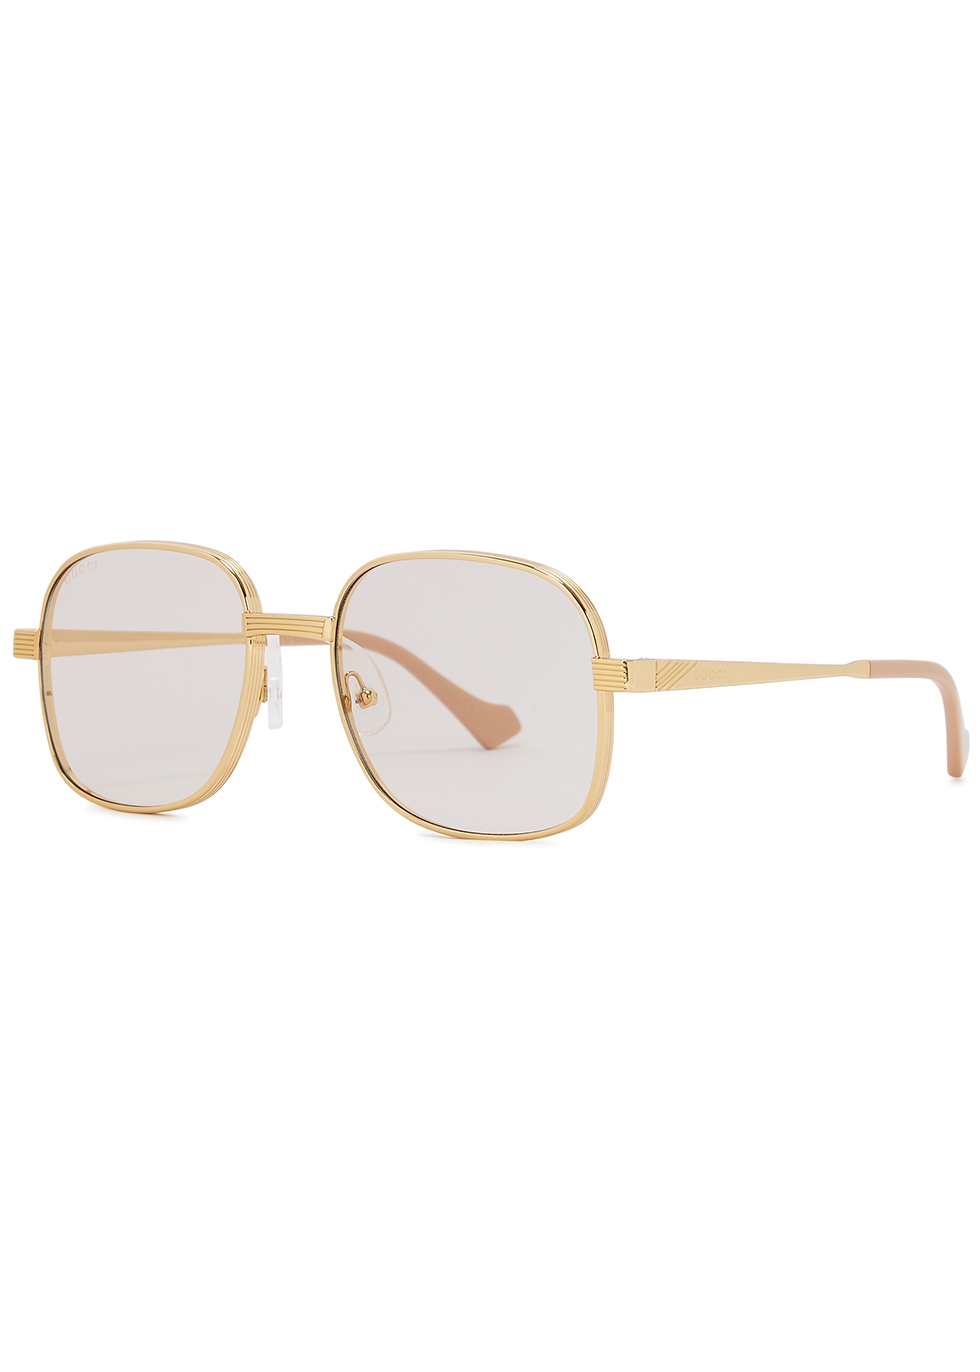 Gucci Gold-tone oval-frame sunglasses 